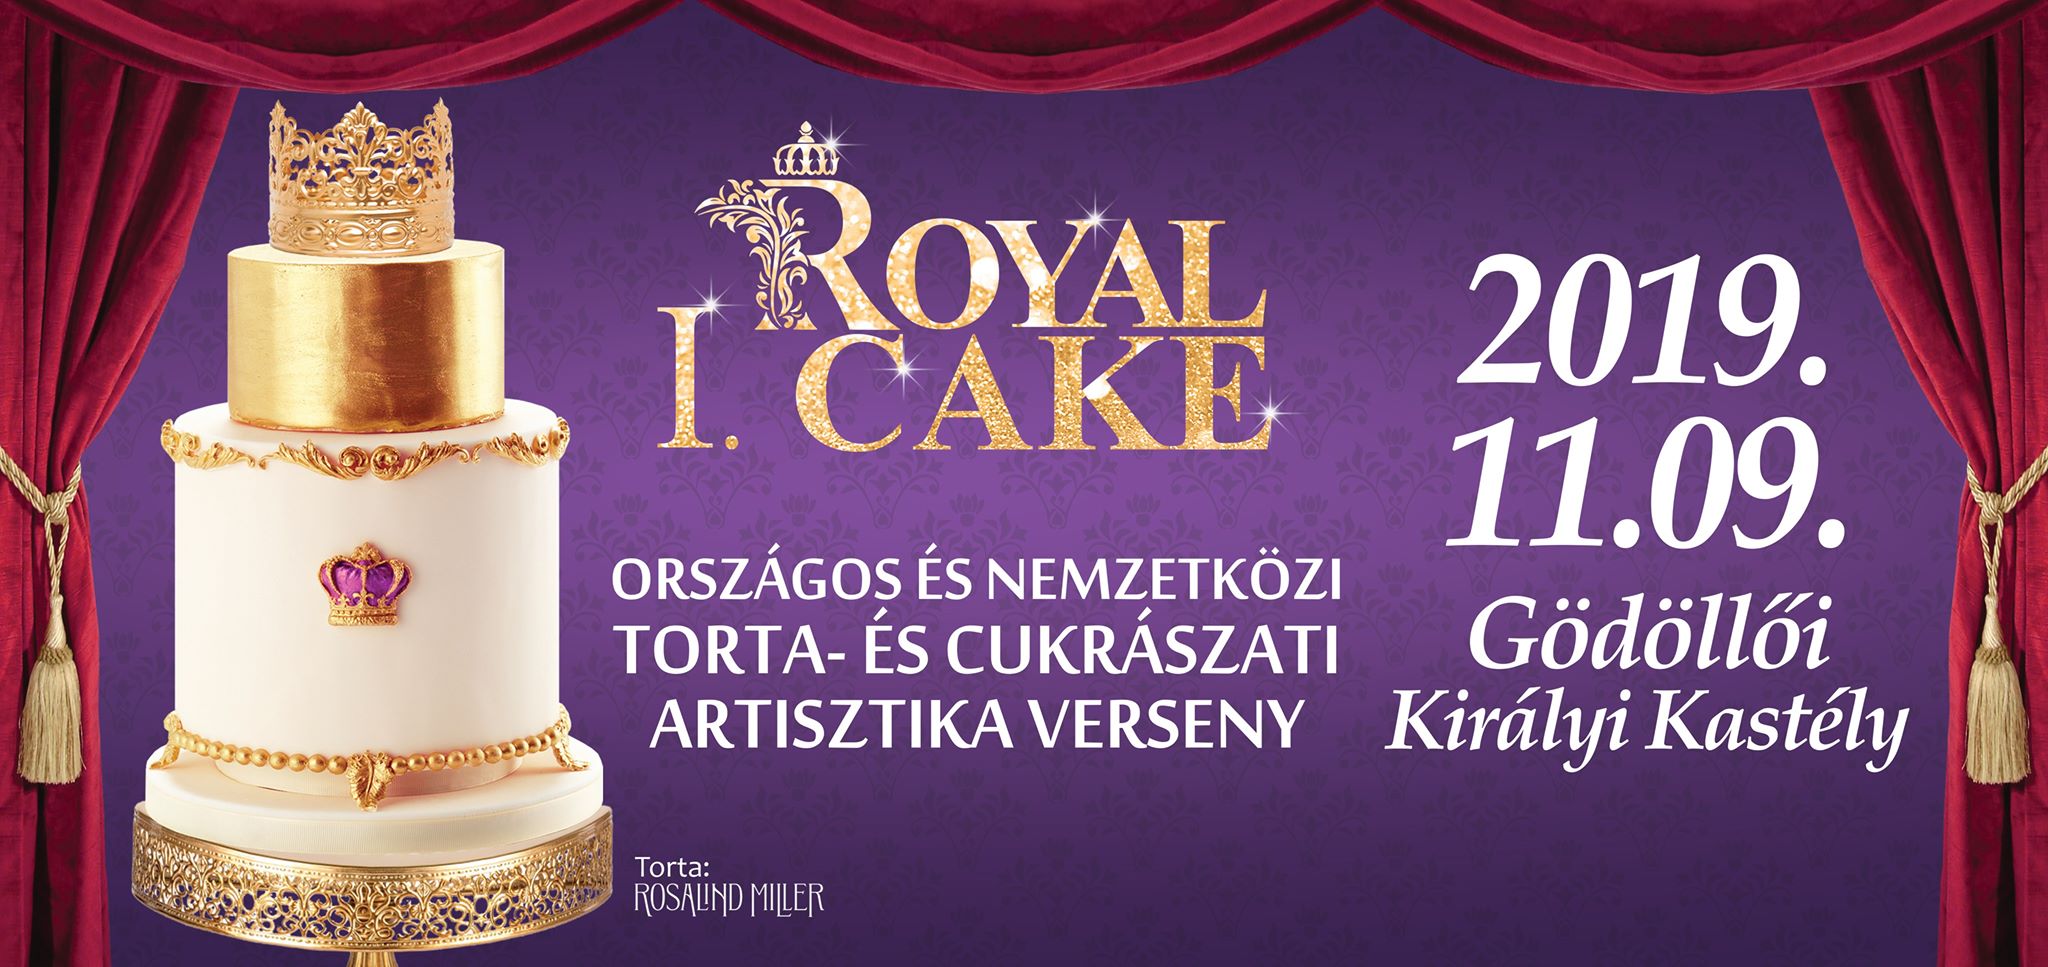 I-royal-cake